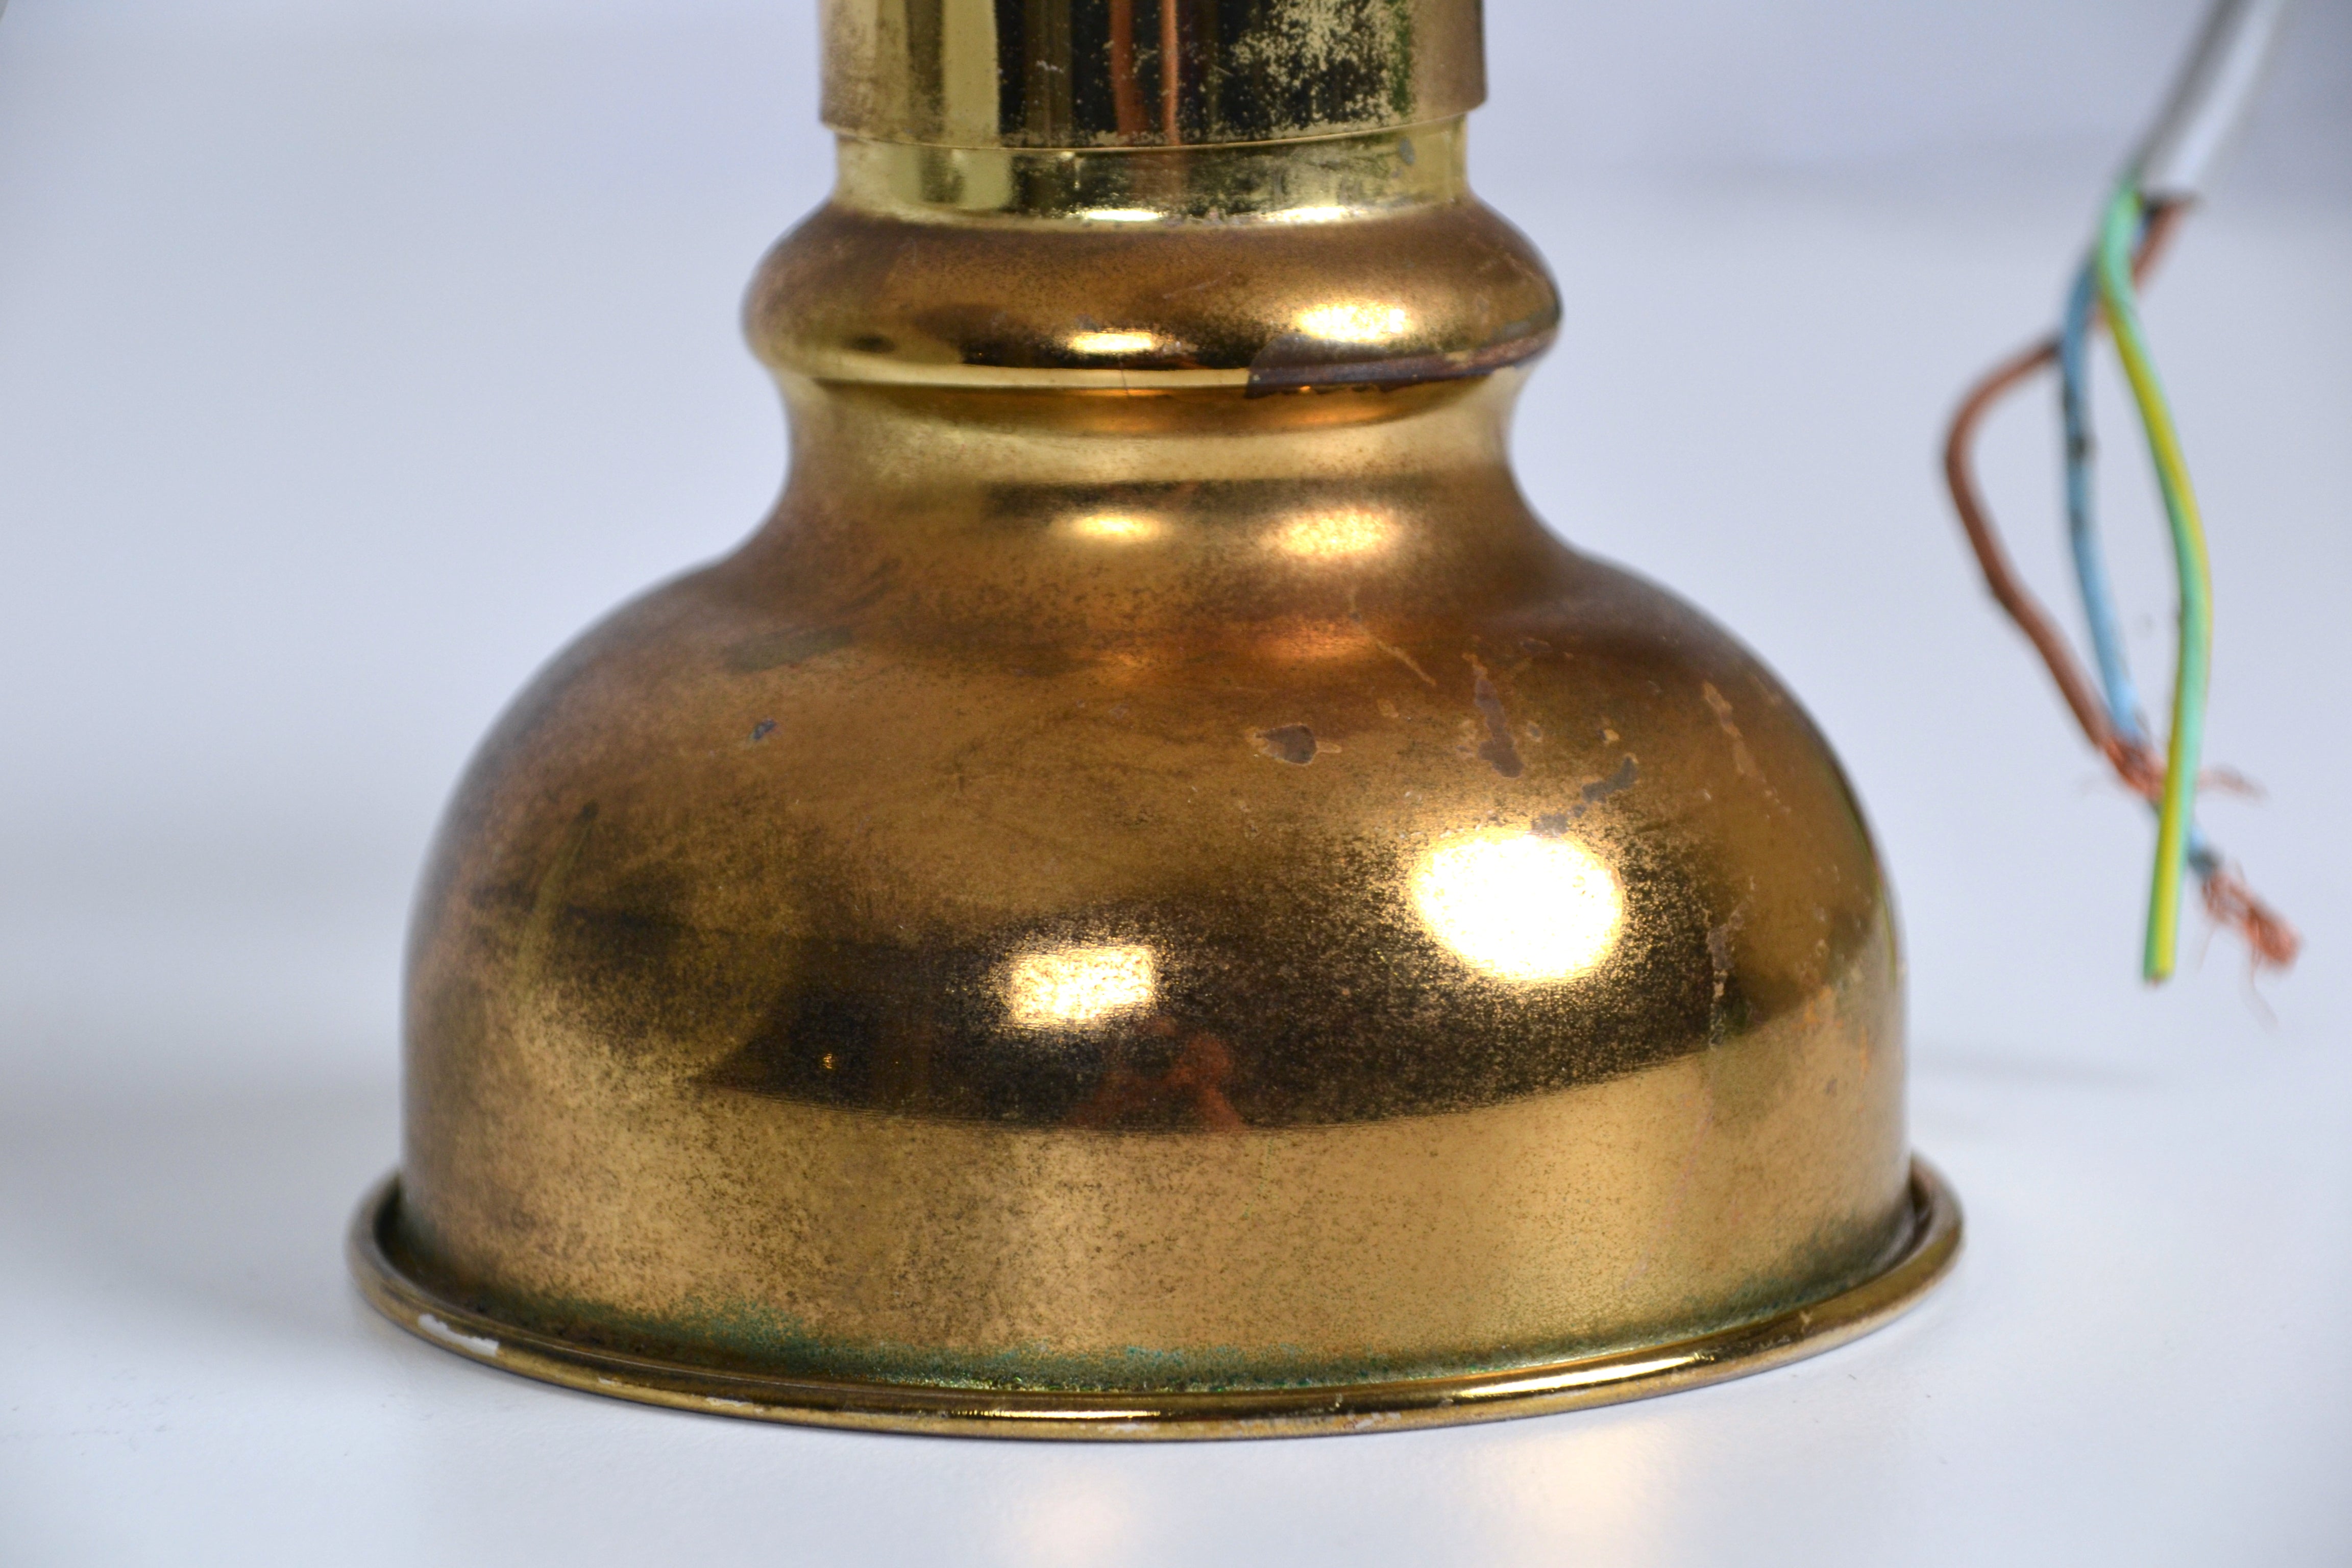 Vintage brass spot lamps